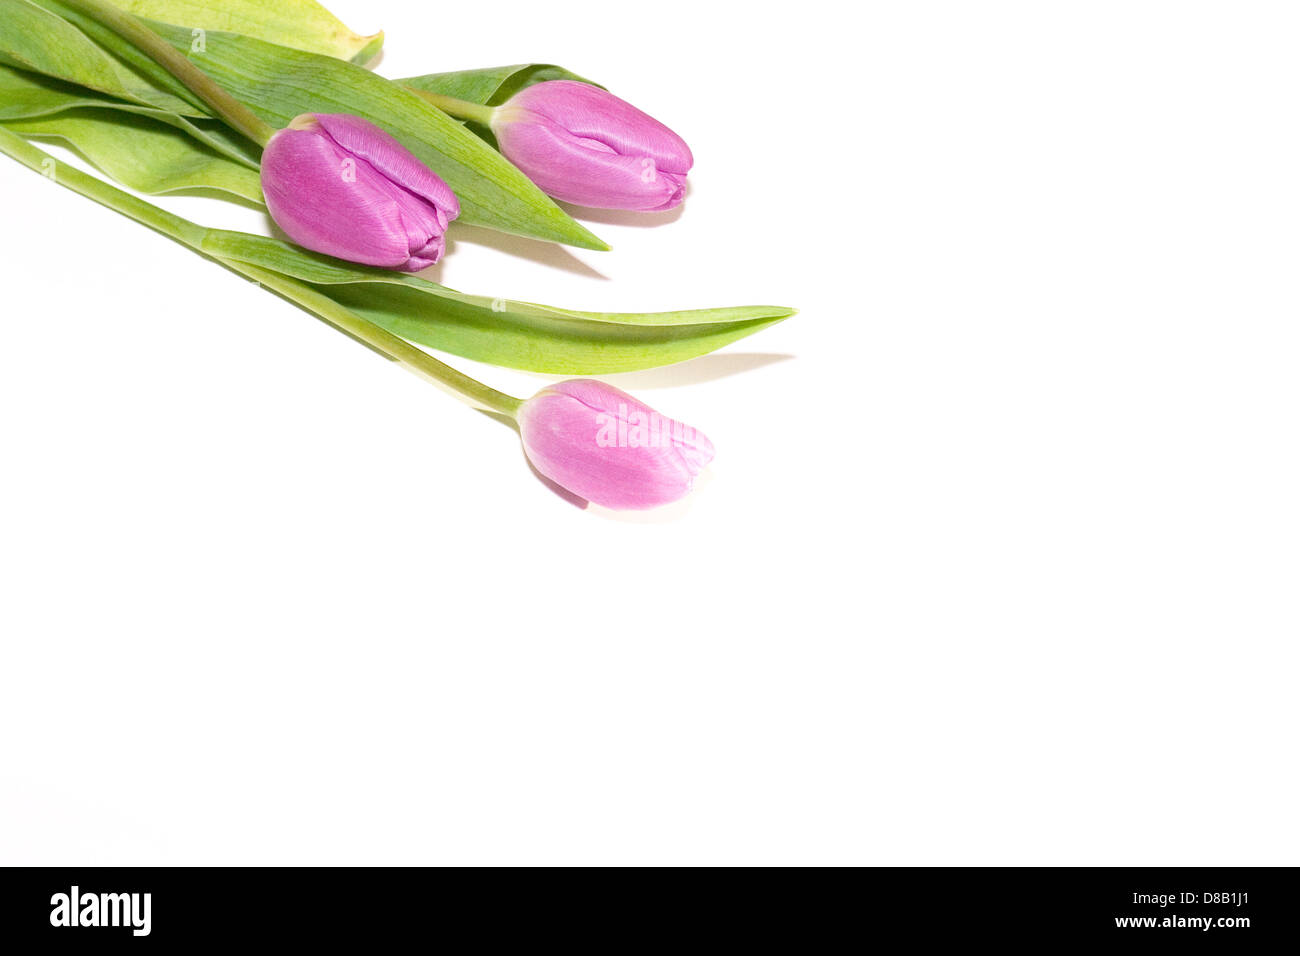 Tulipani viola su sfondo bianco. Studio fotografico Foto Stock